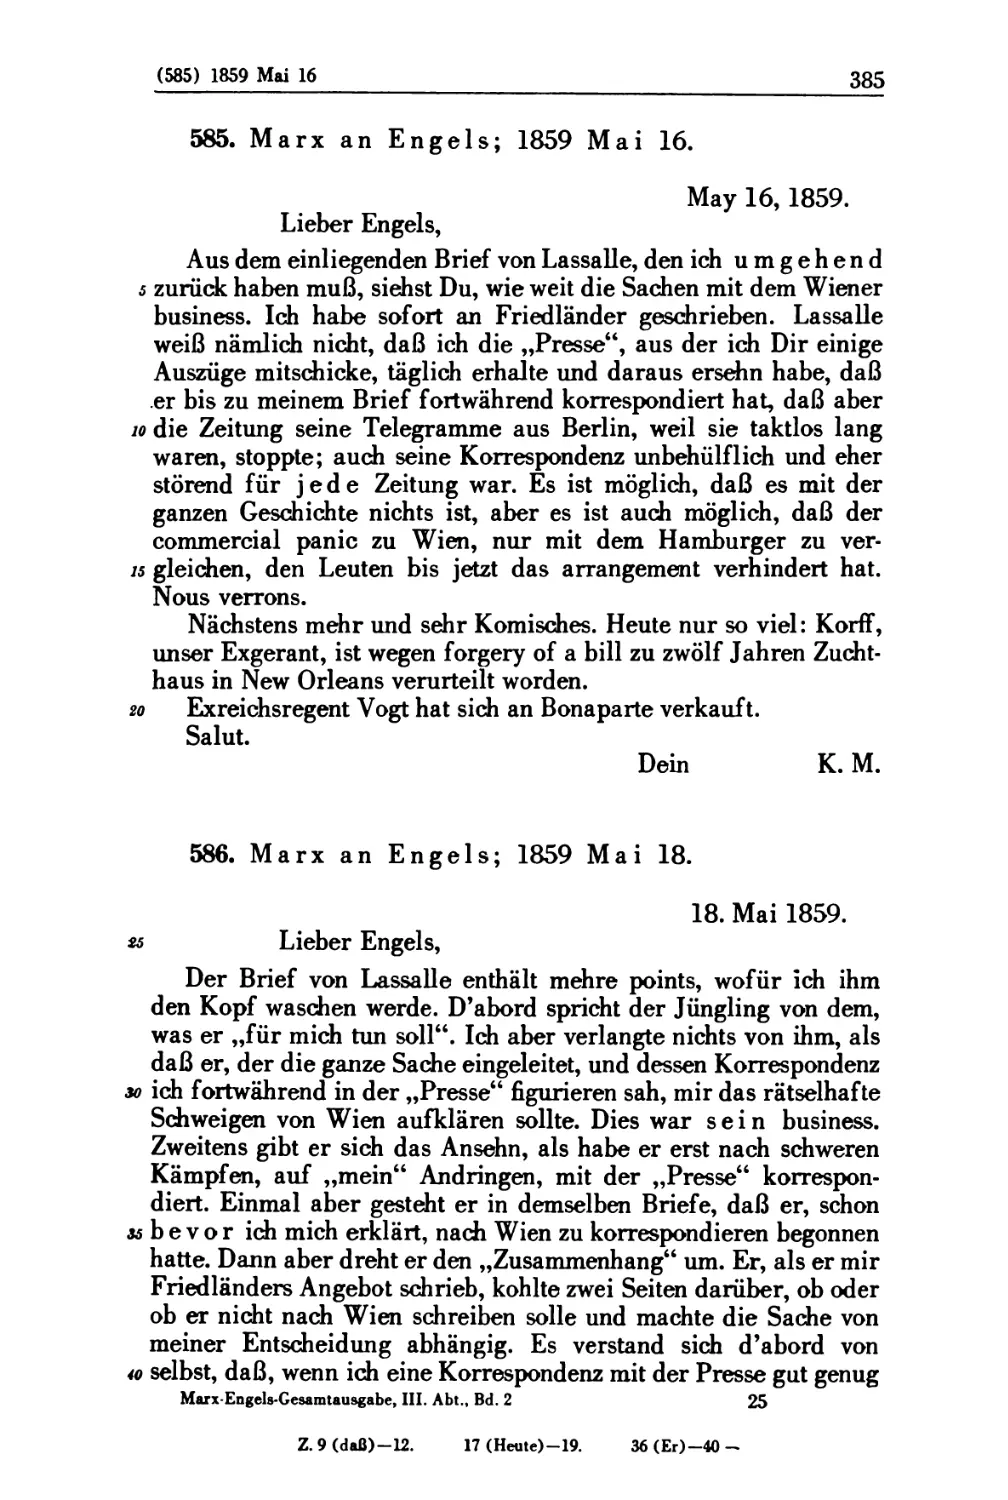 585. Marx an Engels; 1859 Mai 16
586. Marx an Engels; 1859 Mai 18